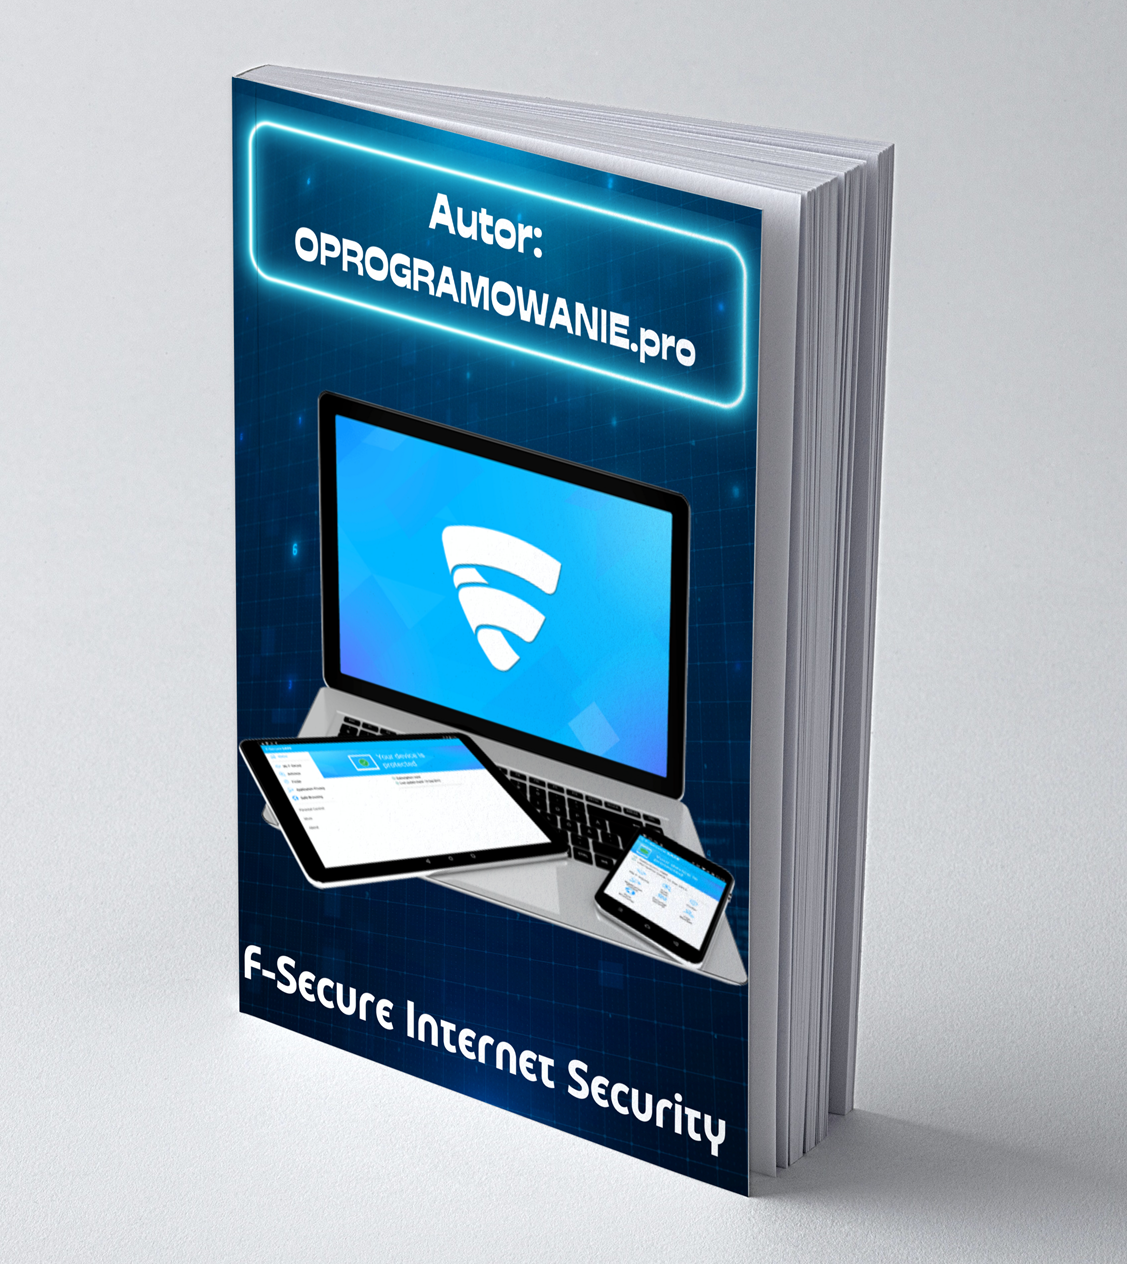 F-Secure Internet Security (PC)